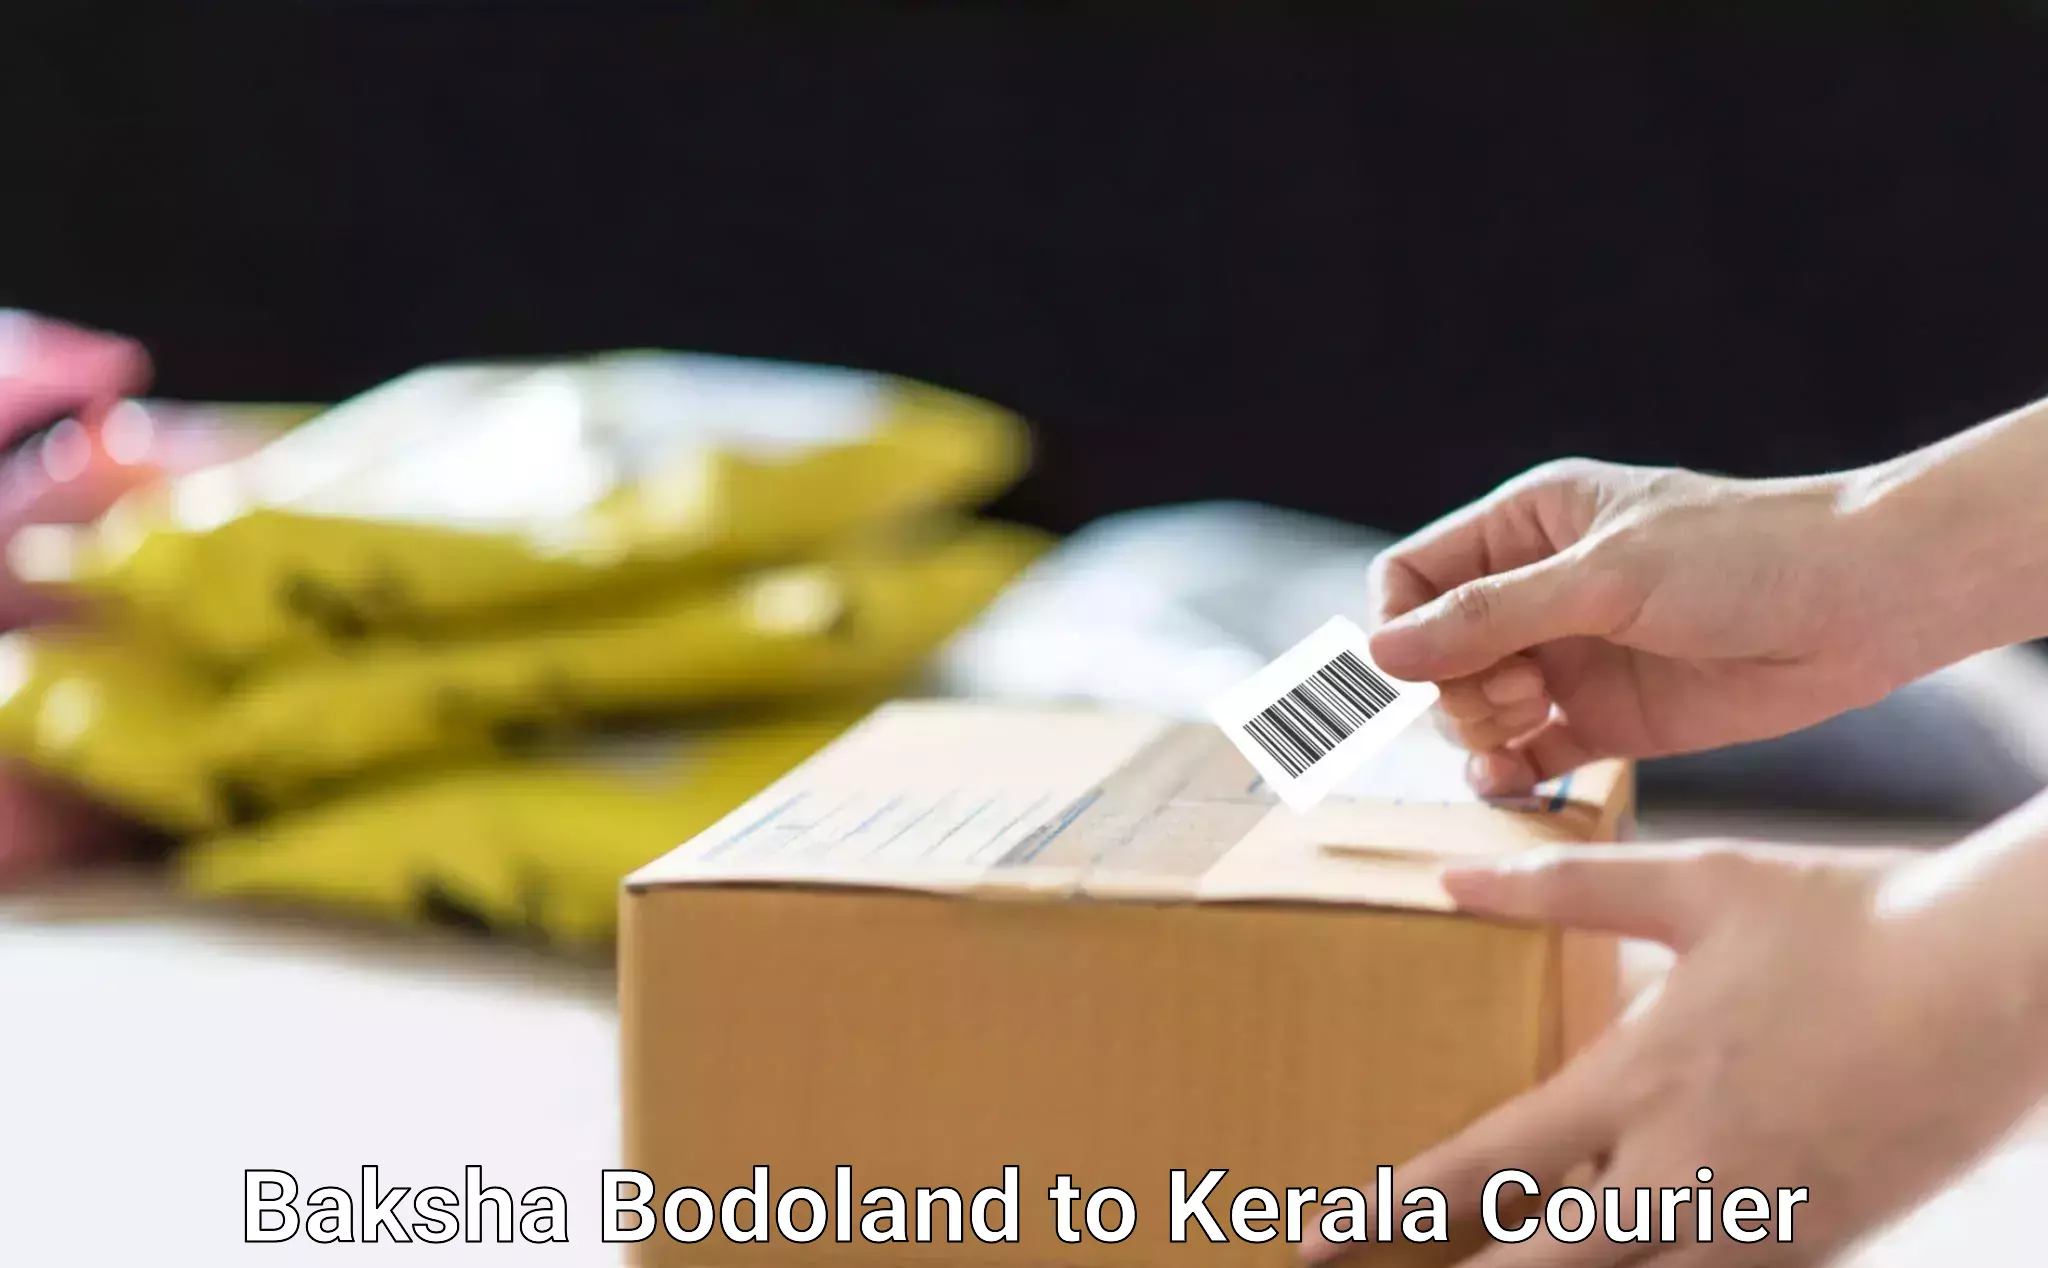 Urgent courier needs Baksha Bodoland to Malappuram